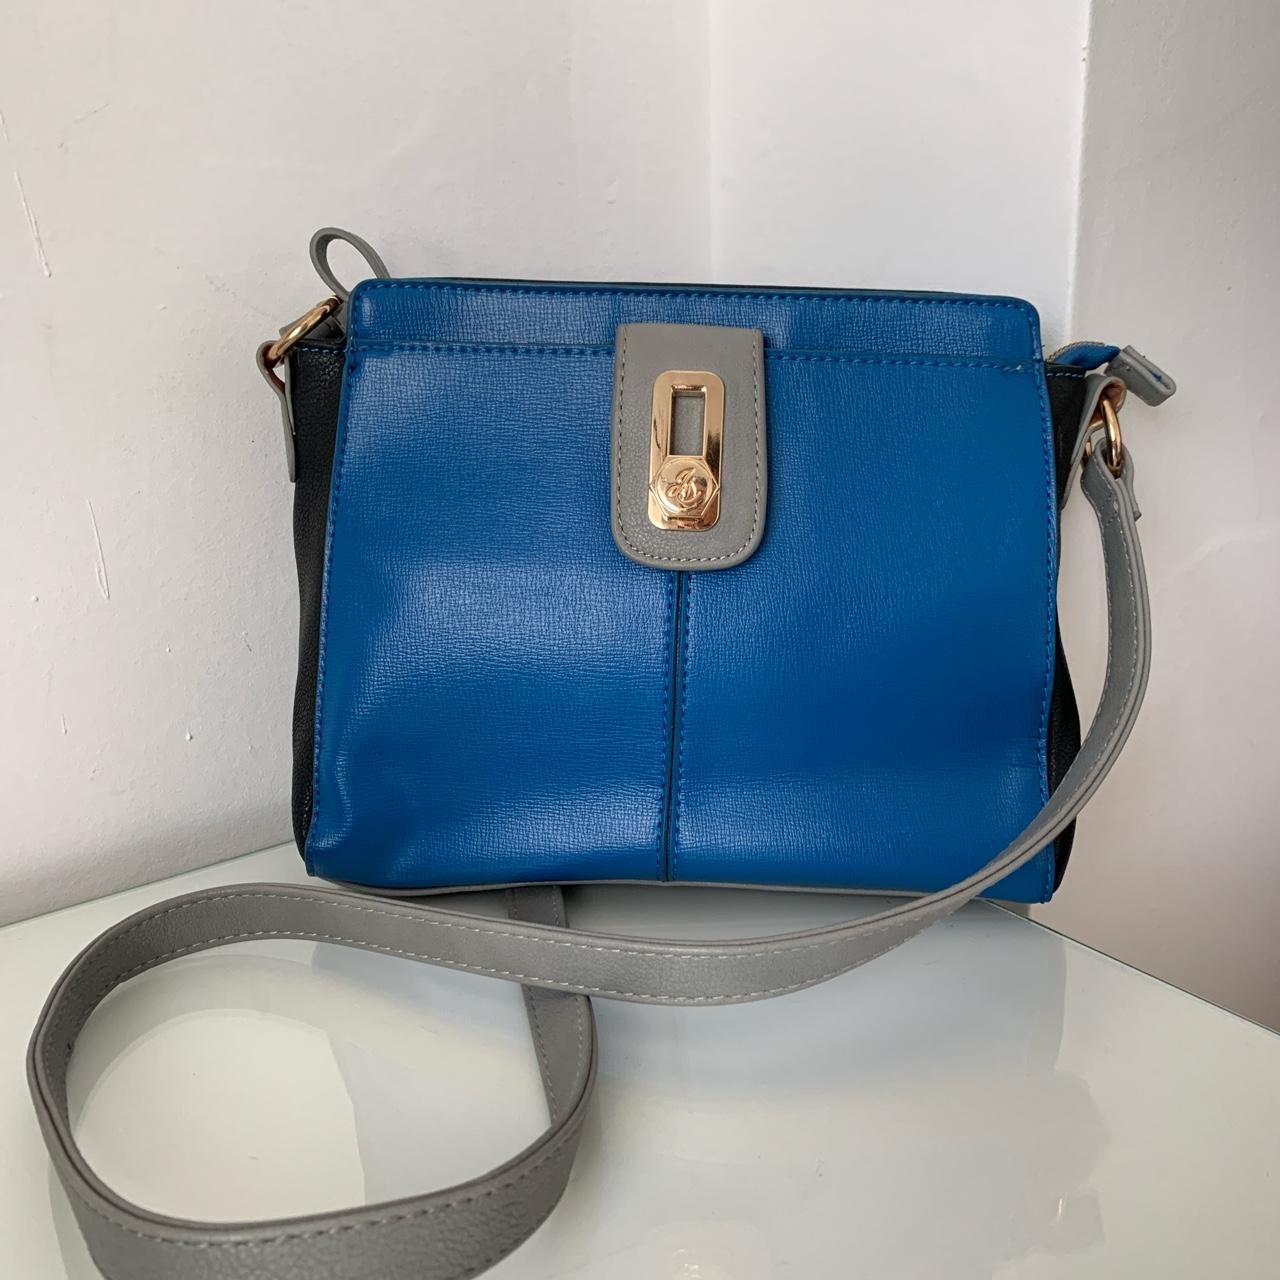 Jane Shilton Women's Blue and Grey Bag | Depop